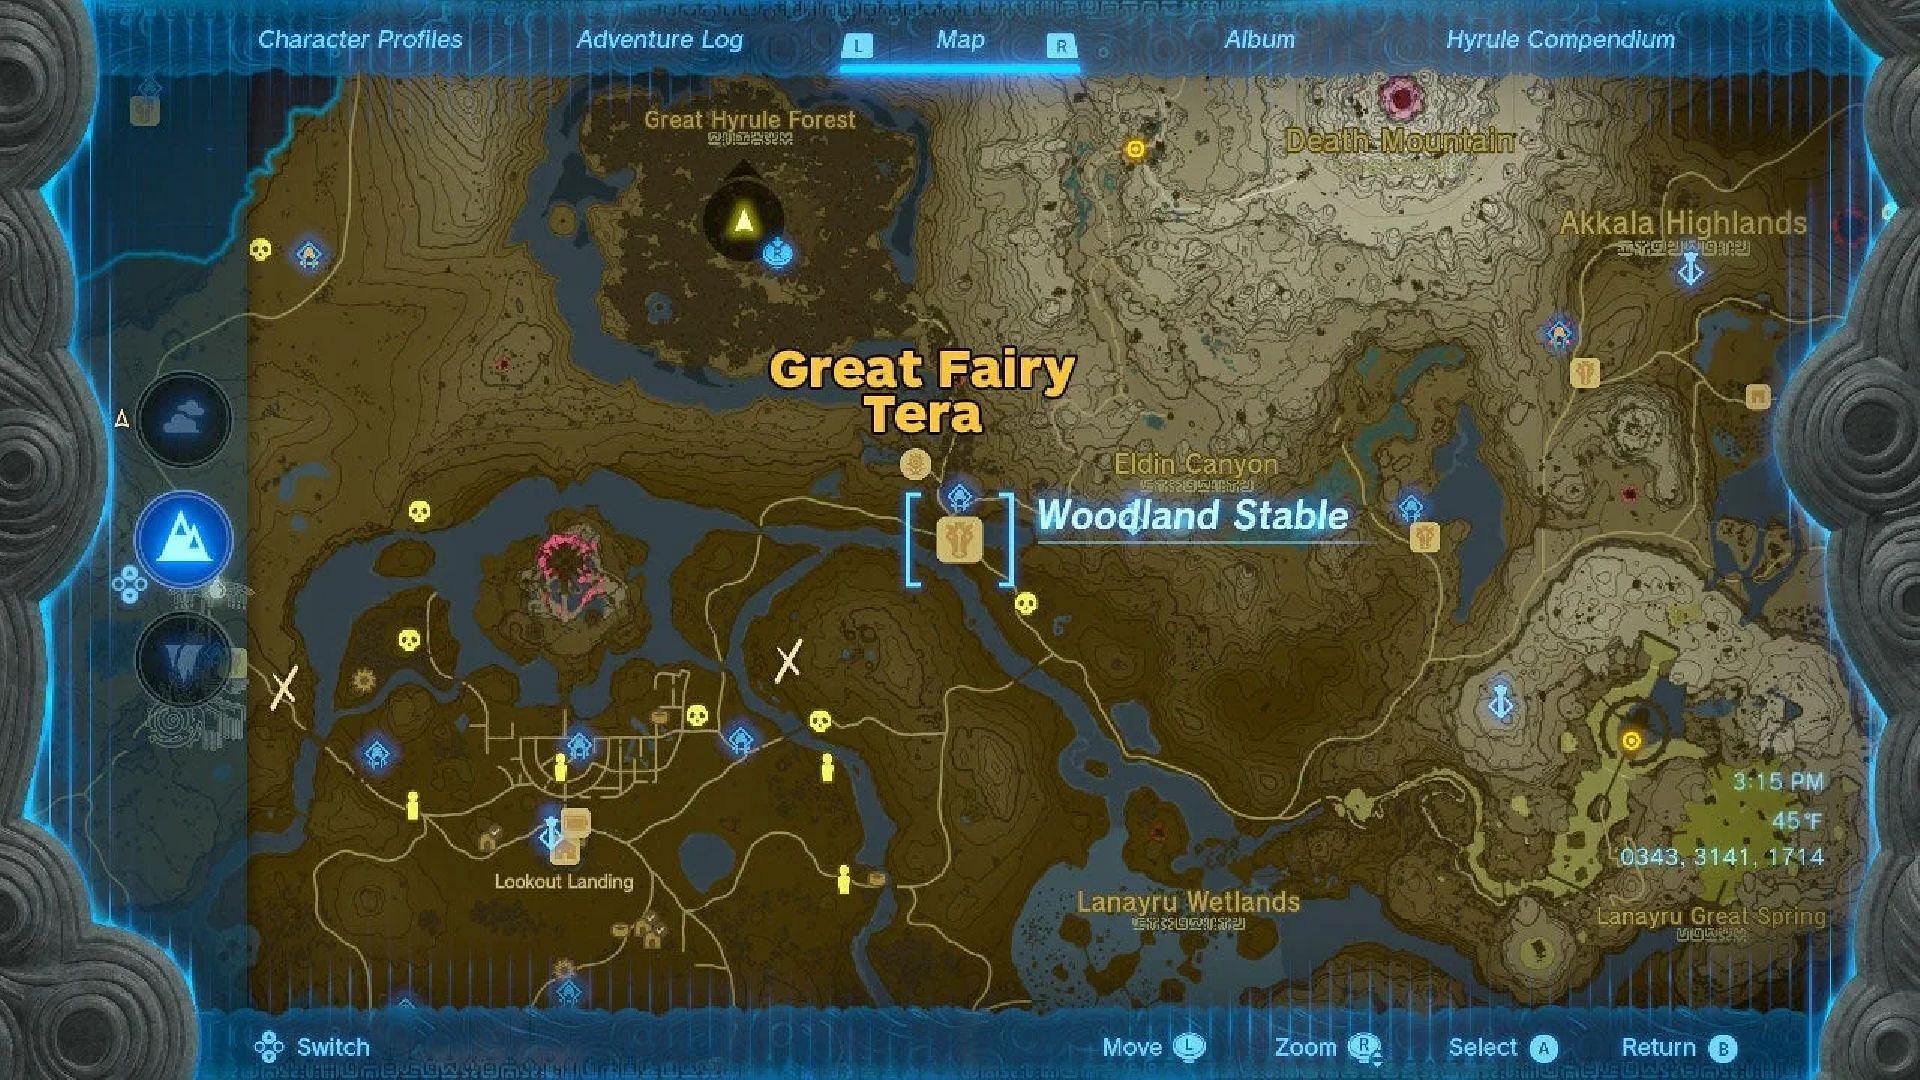 Great Fairy Tera location (Image via Nintendo)